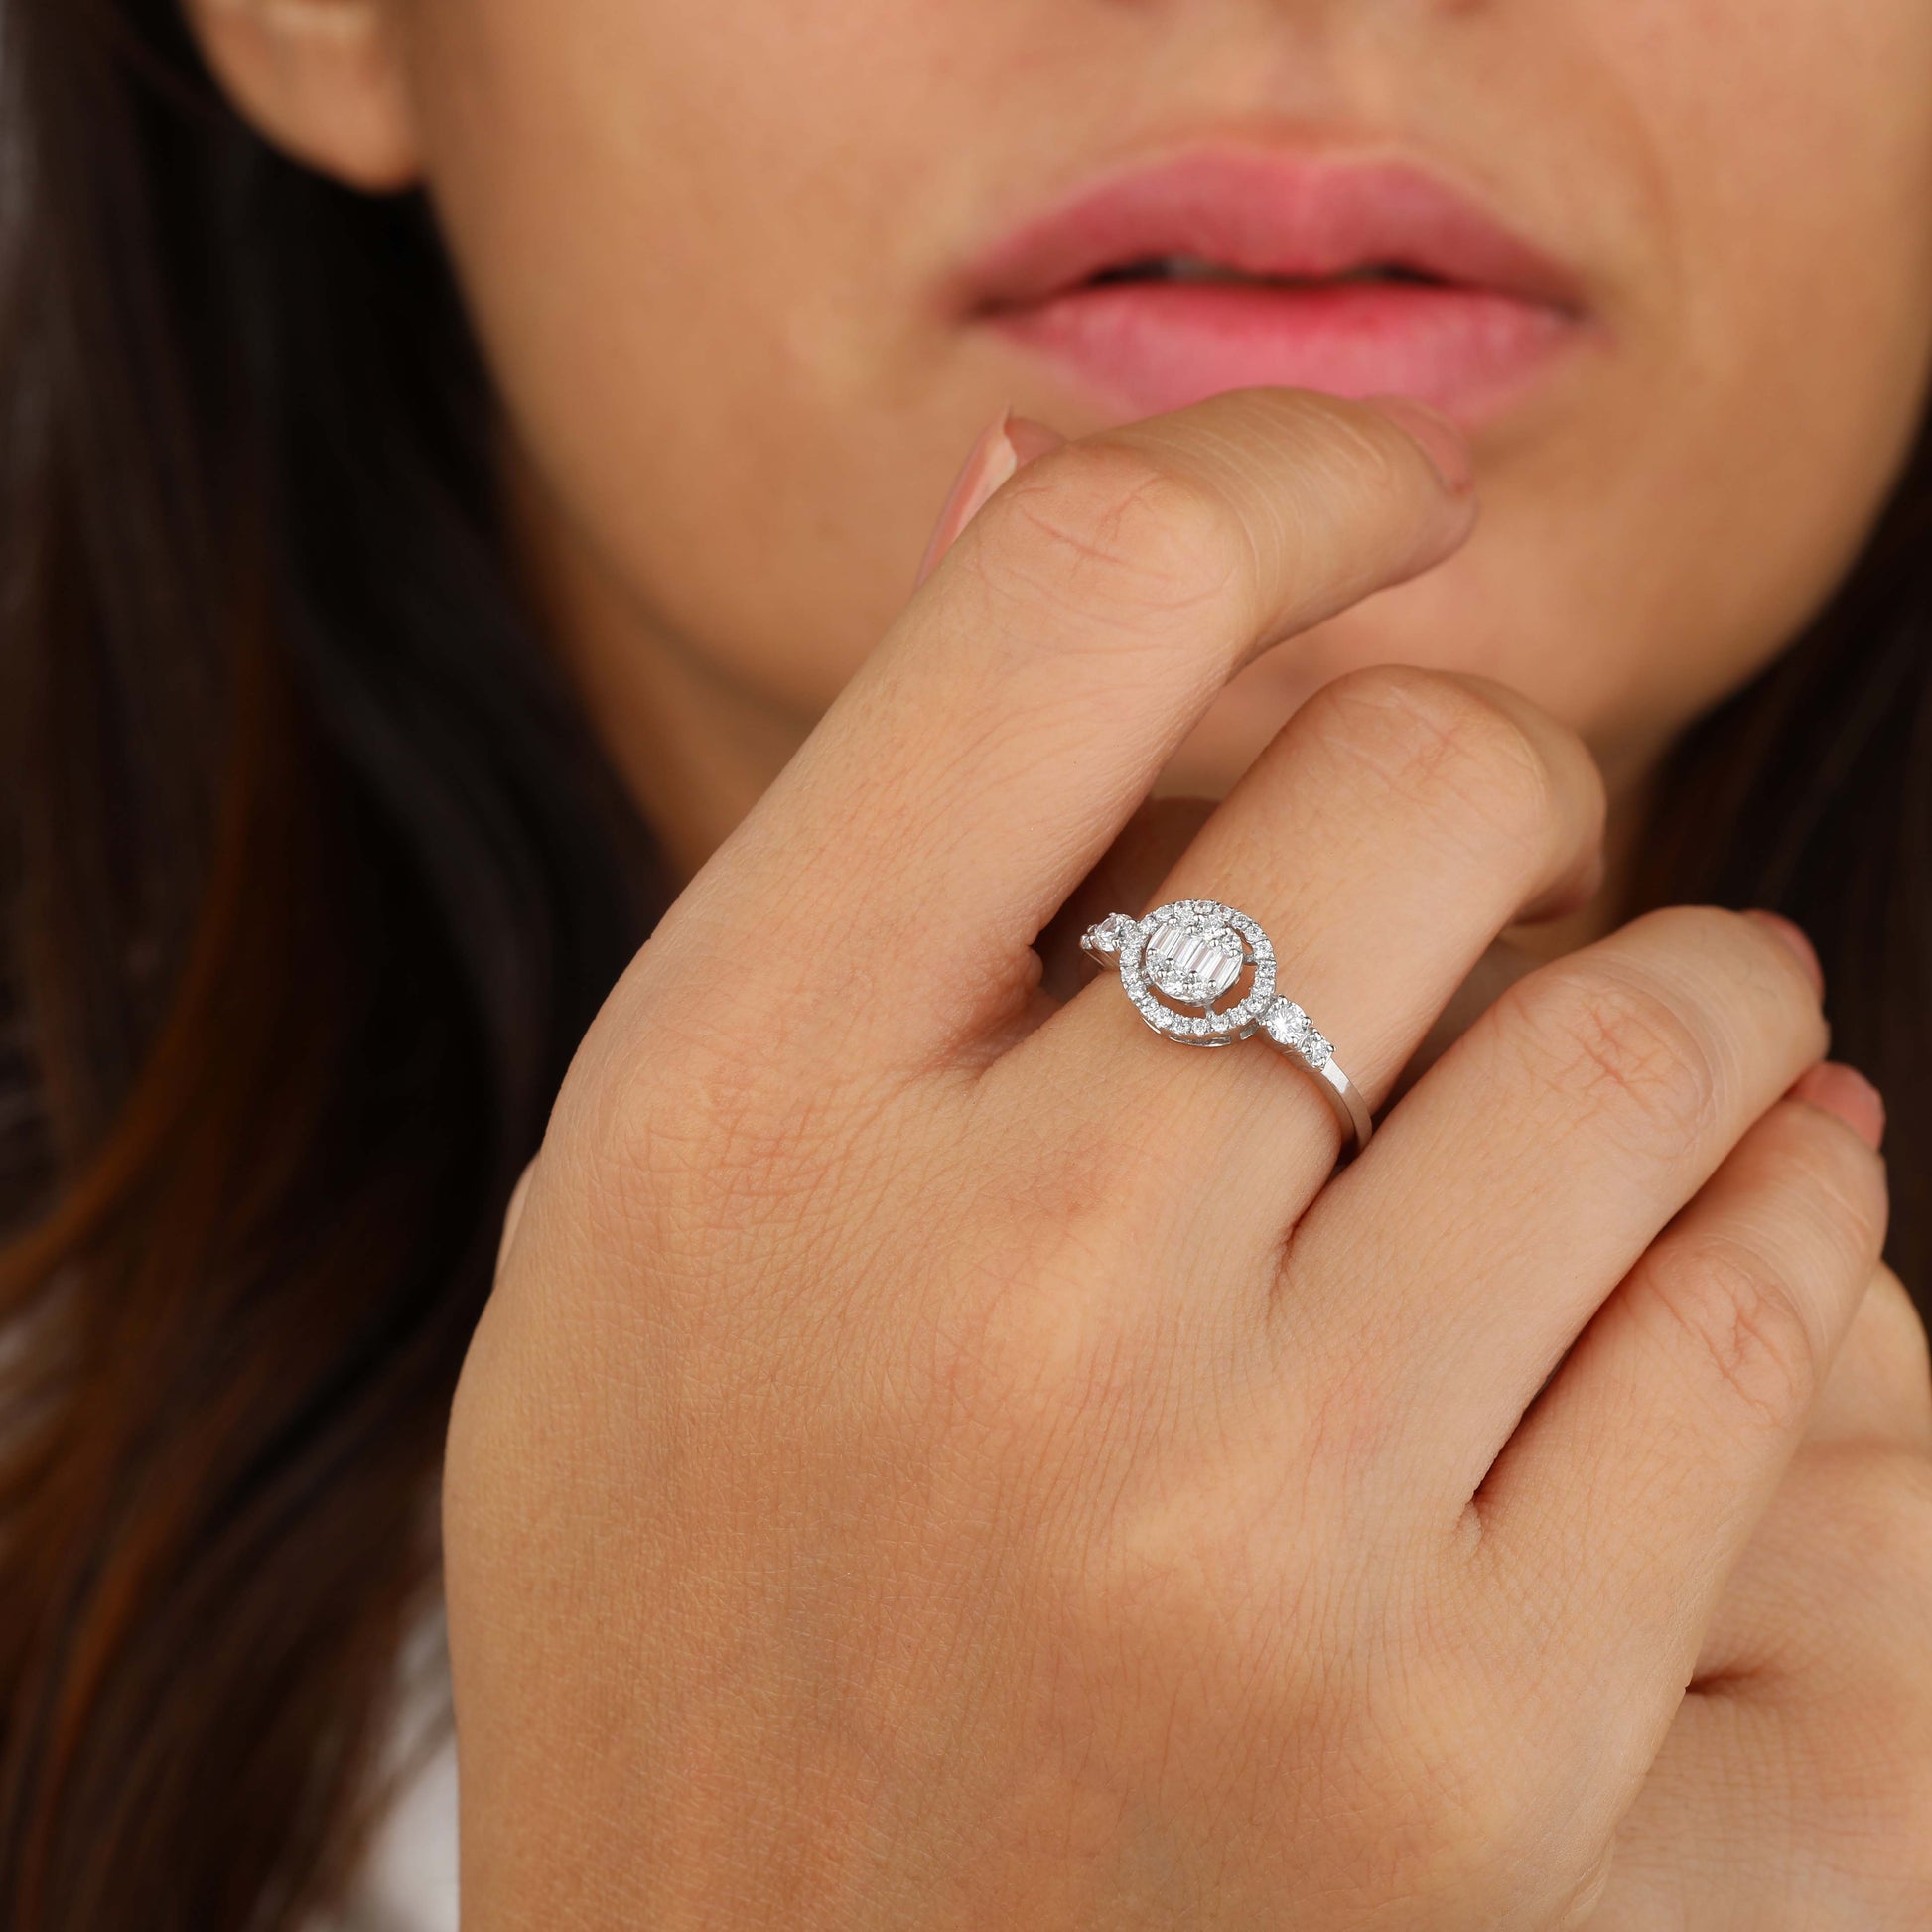 halo wedding ring wearing by girl